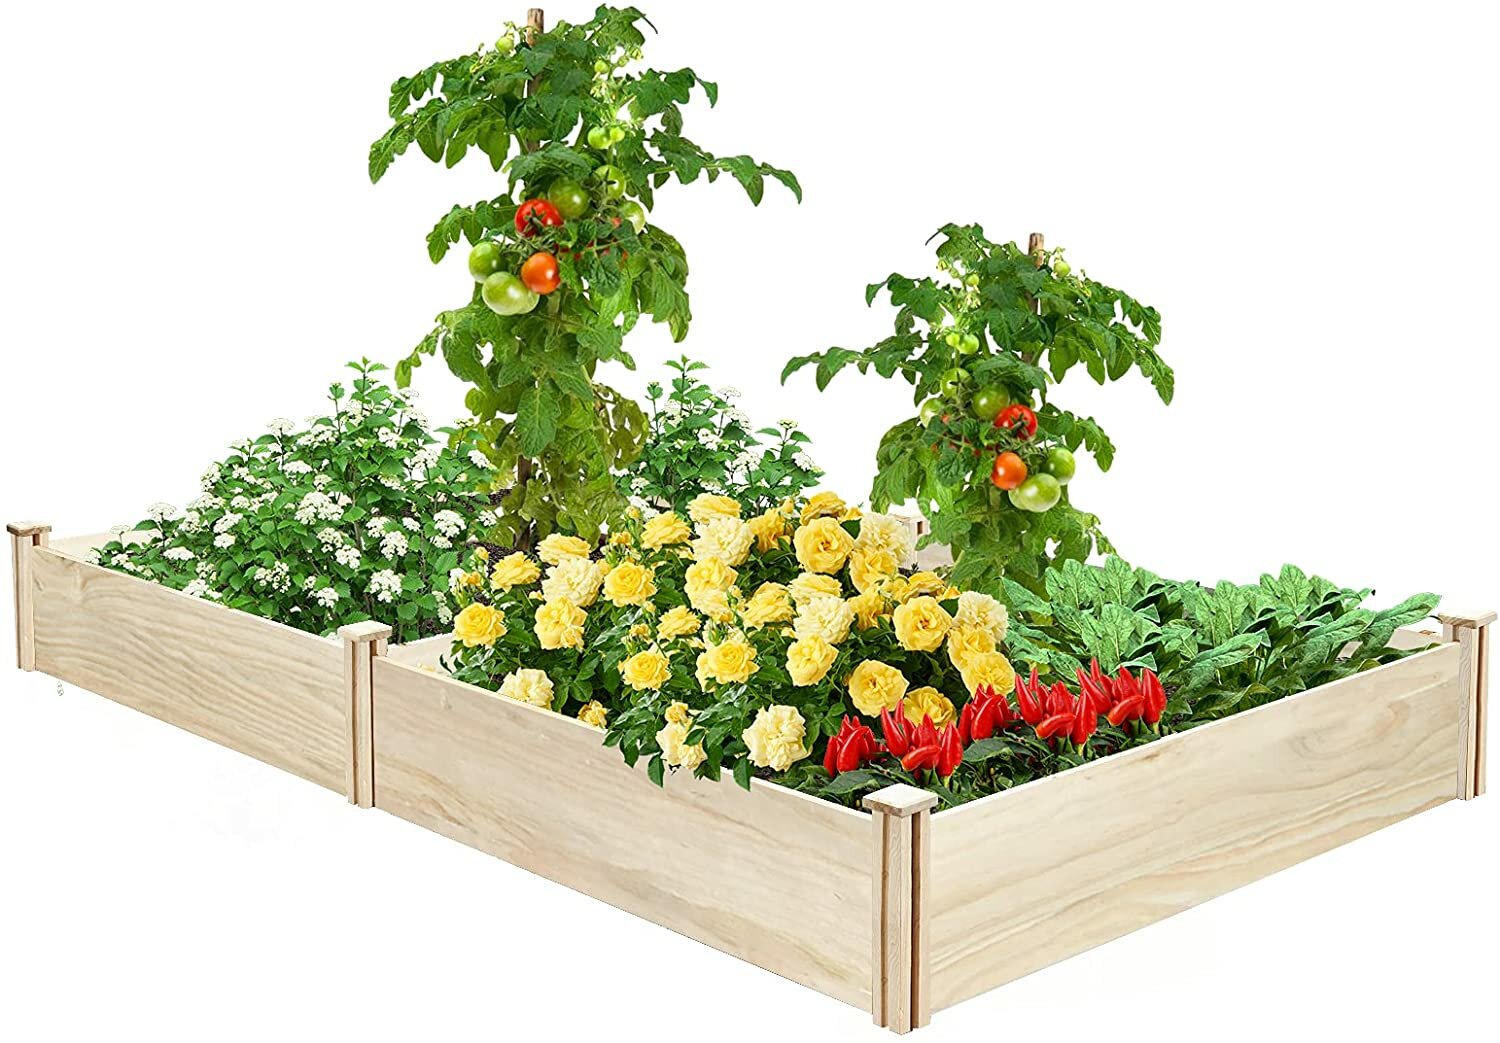 Image of KingSo Raised Garden Bed 8×4×1FT Wooden Garden Bed Elevated Planter Box Outdoor Garden Raised Bed Kit for Vegetable Flow